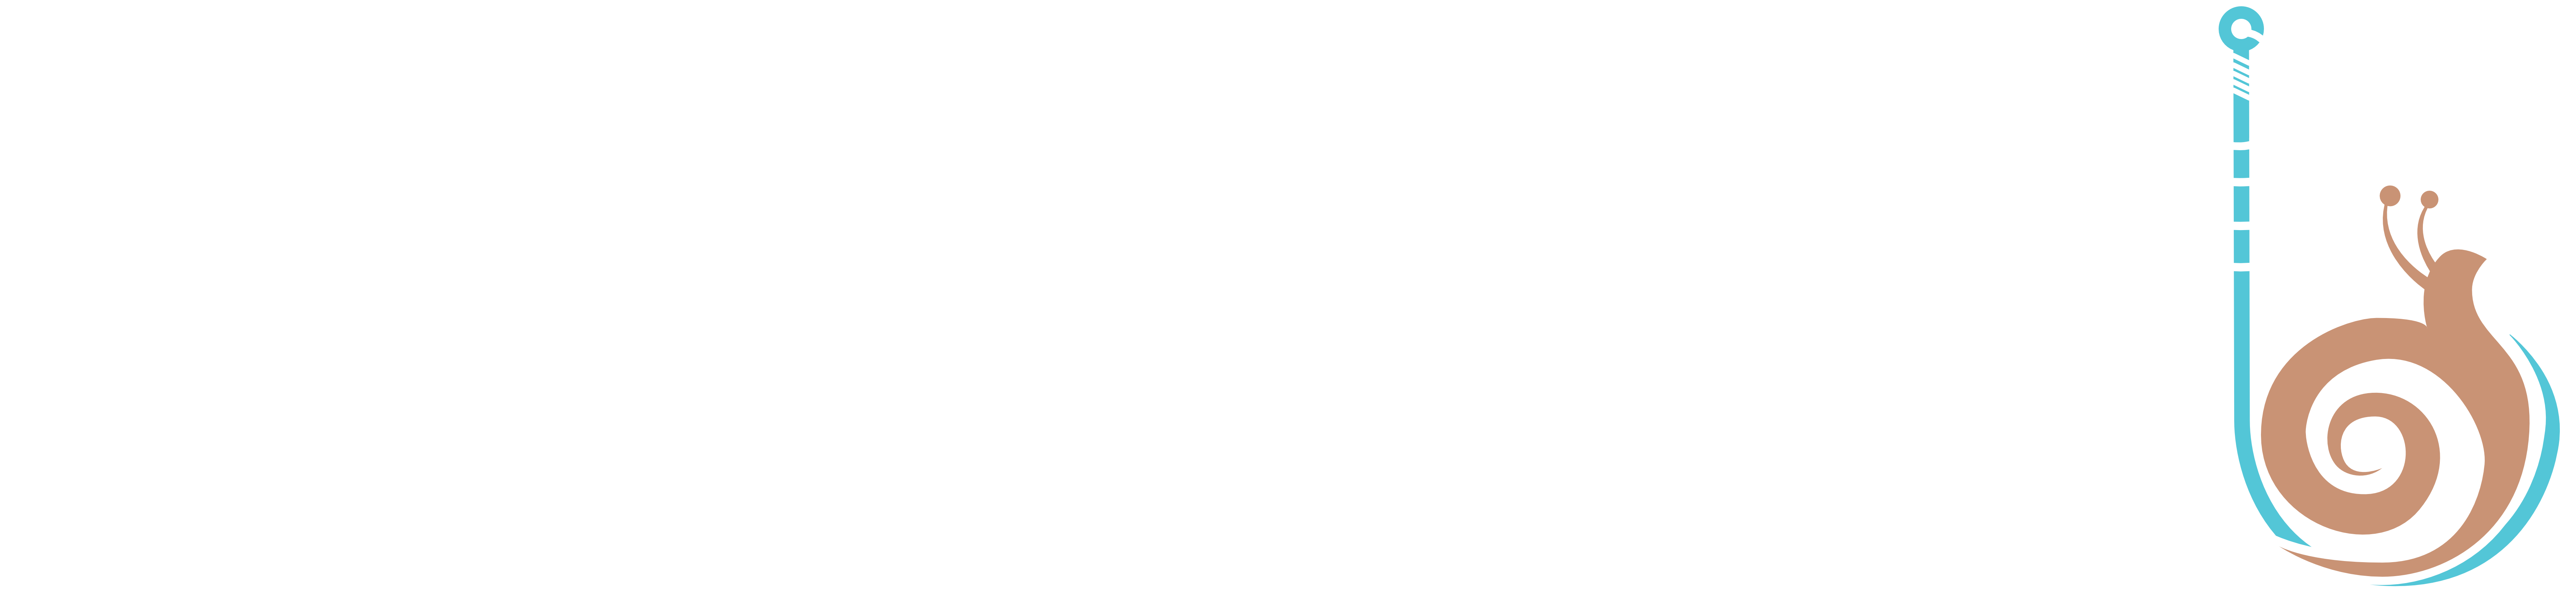 Snail Fishing Baits logo